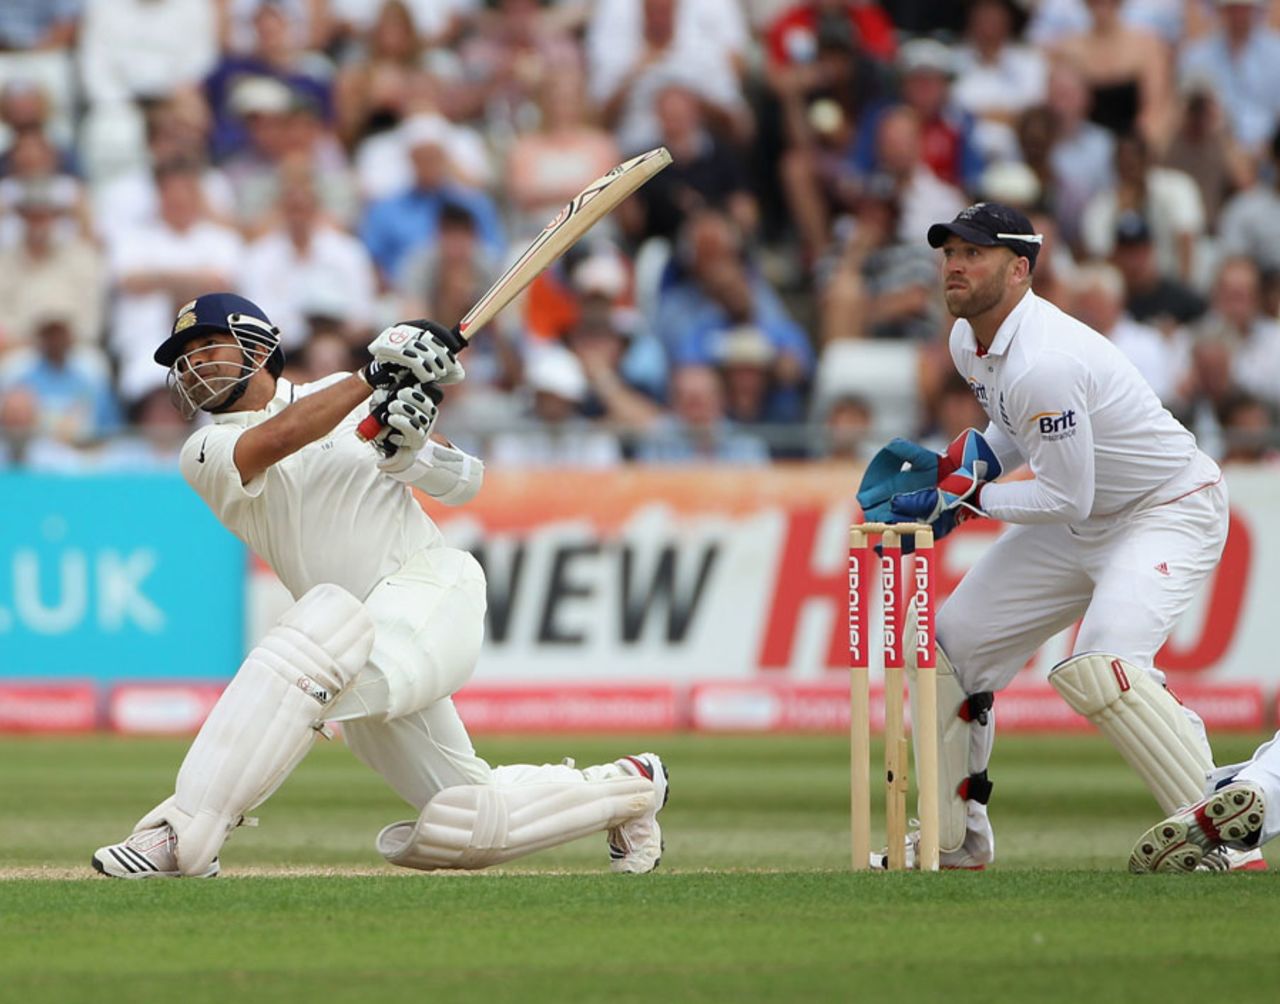 Sachin Tendulkar launches a slog-sweep during his half-century, England v India, 2nd Test, Trent Bridge, 4th day, August 1, 2011